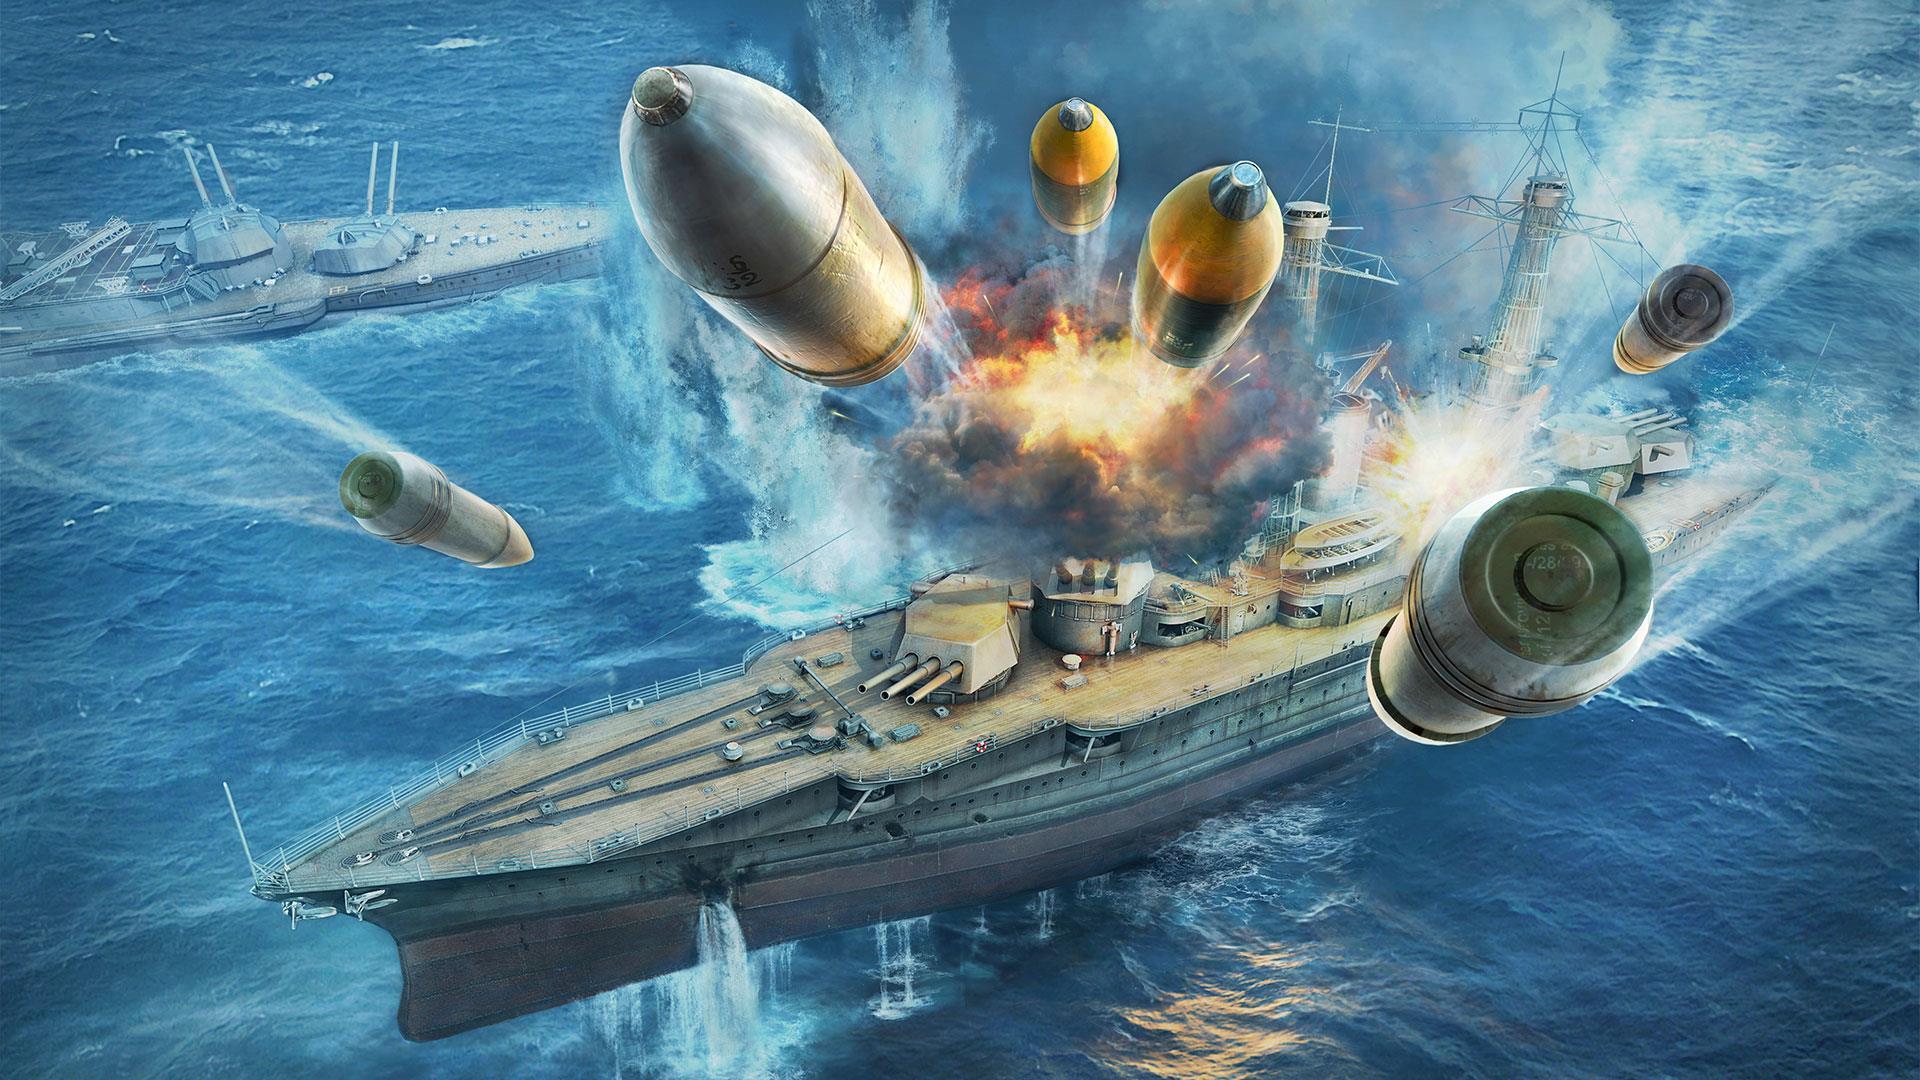 world of warships wallpaper hd,vehicle,strategy video game,warship,watercraft,airship